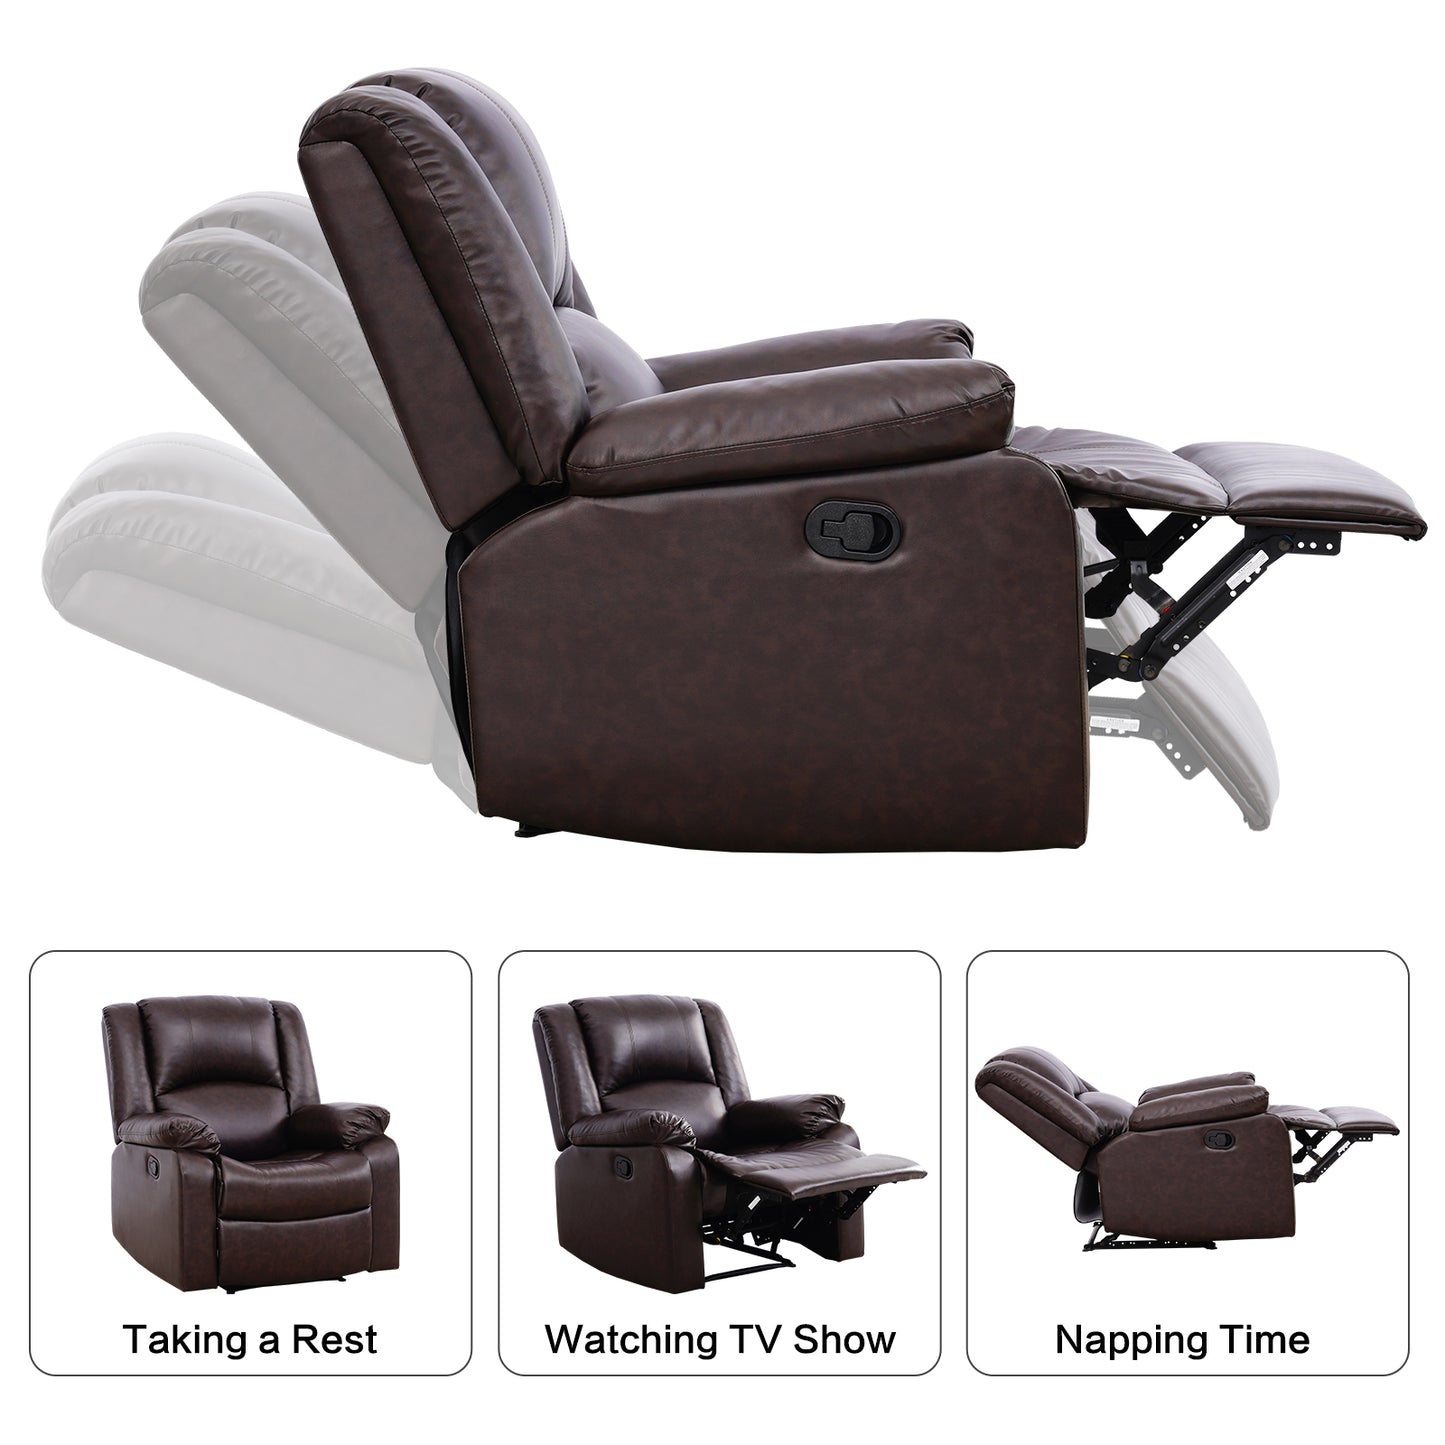 Large Real Leather Recliner Chair, 150 Degree Tilt, Living Room Bedroom Sofa Recliner